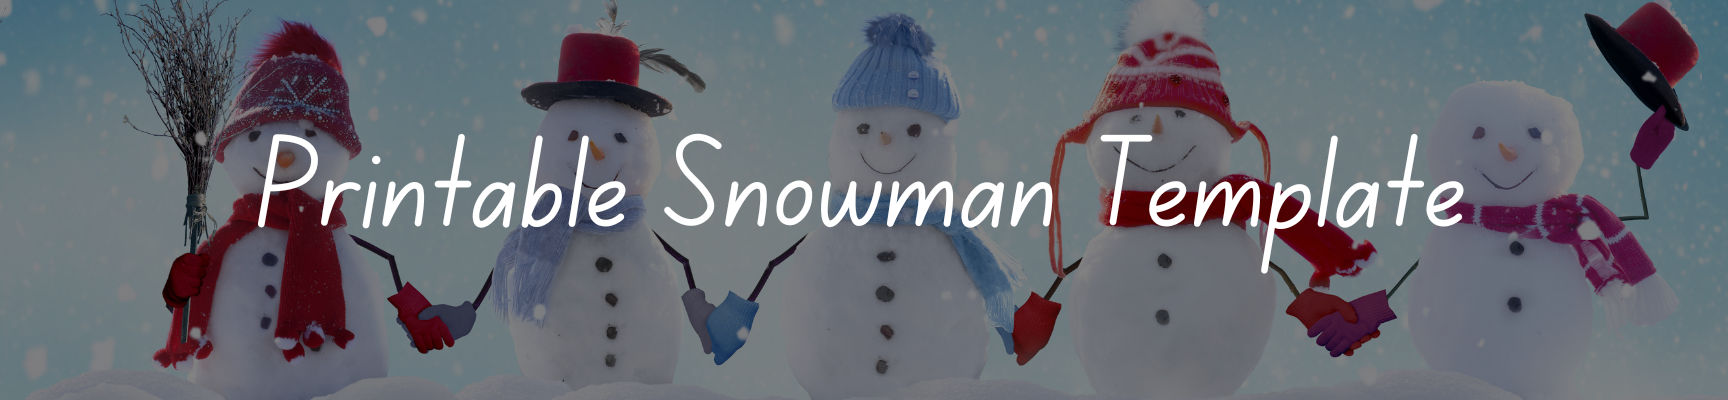 Printable Snowman Template